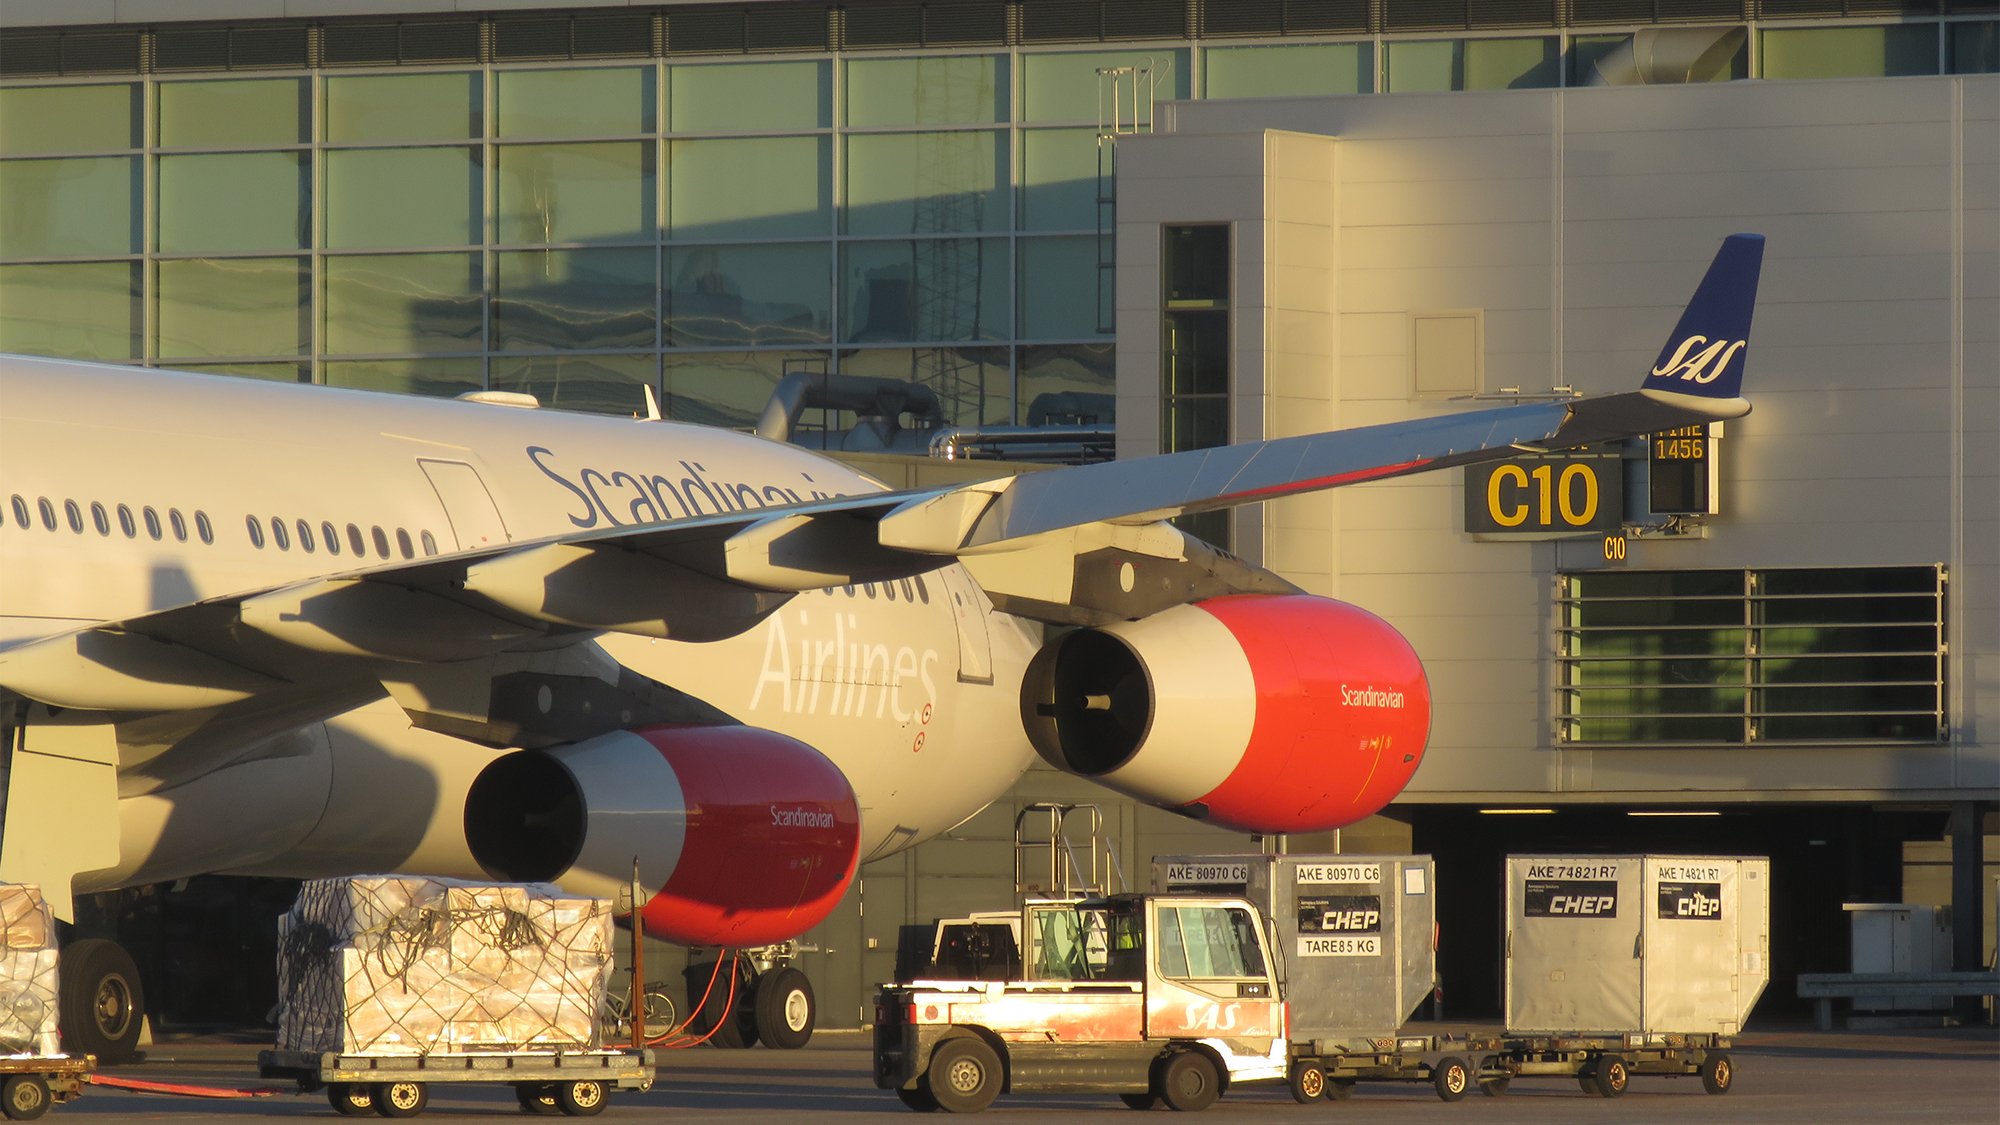 Copenhagen airport serves around 23 million passengers per annum. Image: Arup